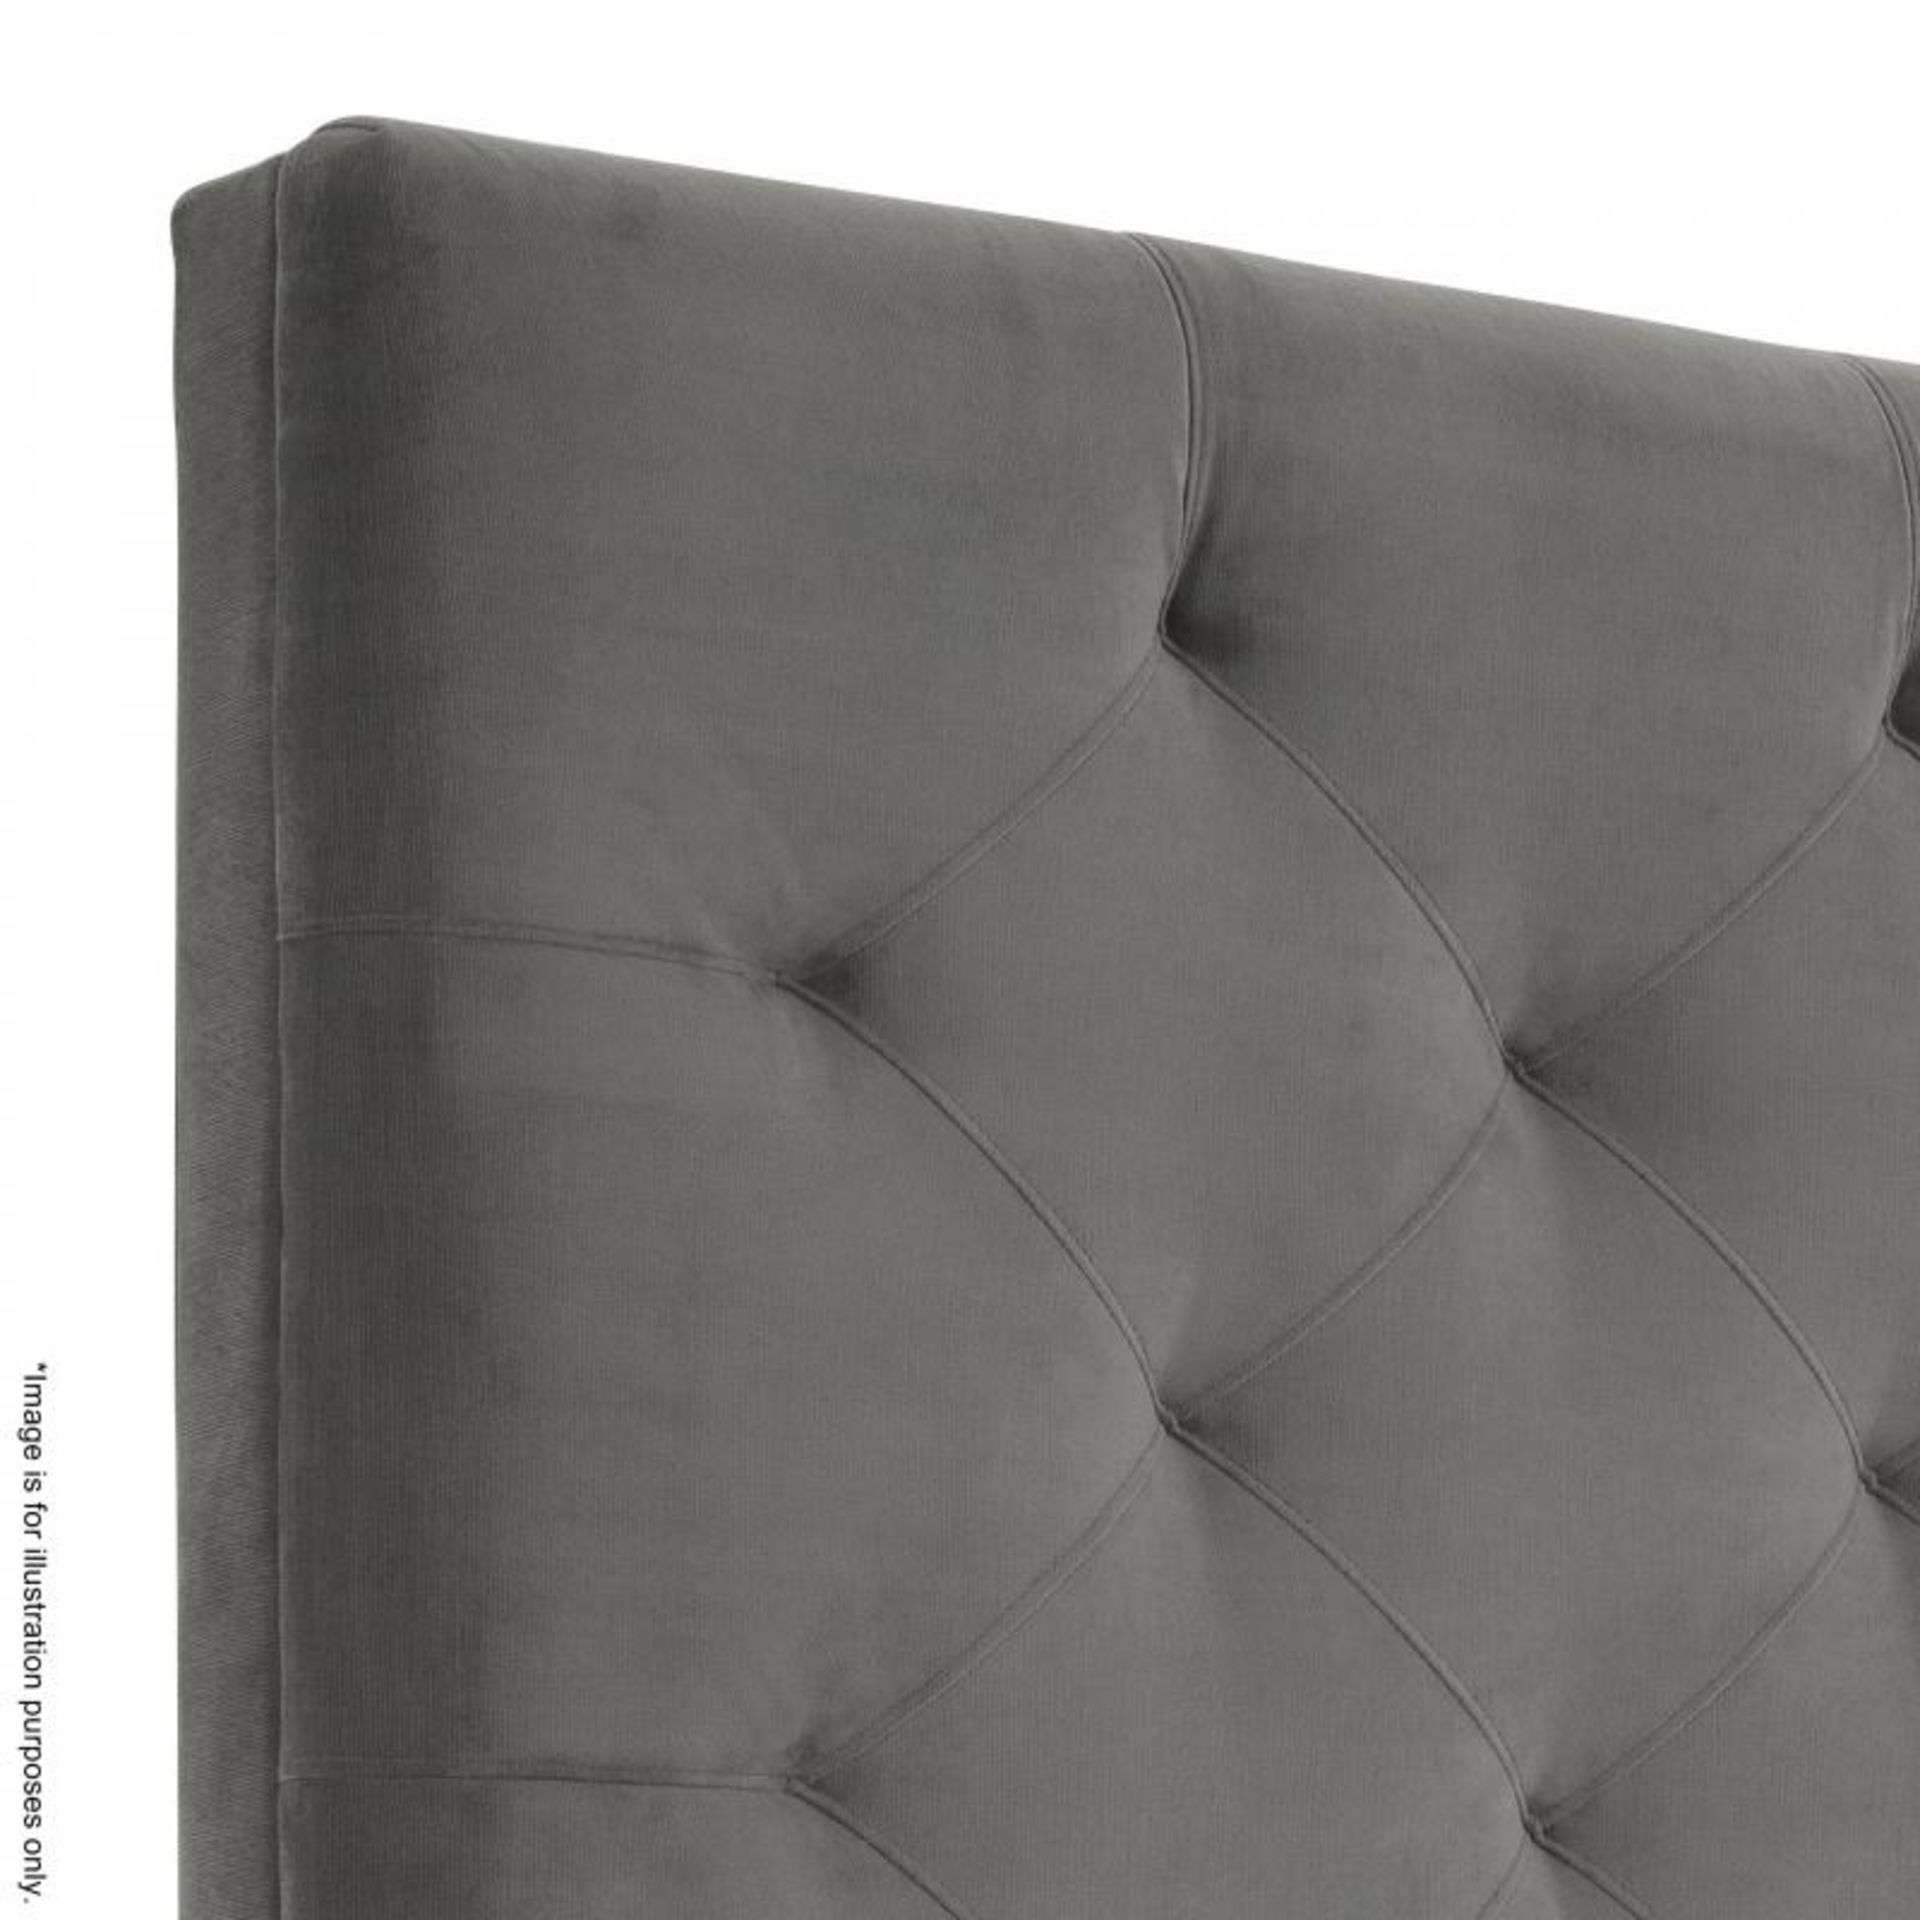 1 x Eichholtz 'Cesare ' Chesterfield-Inspired Upholstered Headboard In A Granite Grey Velvet - Dime - Image 9 of 10